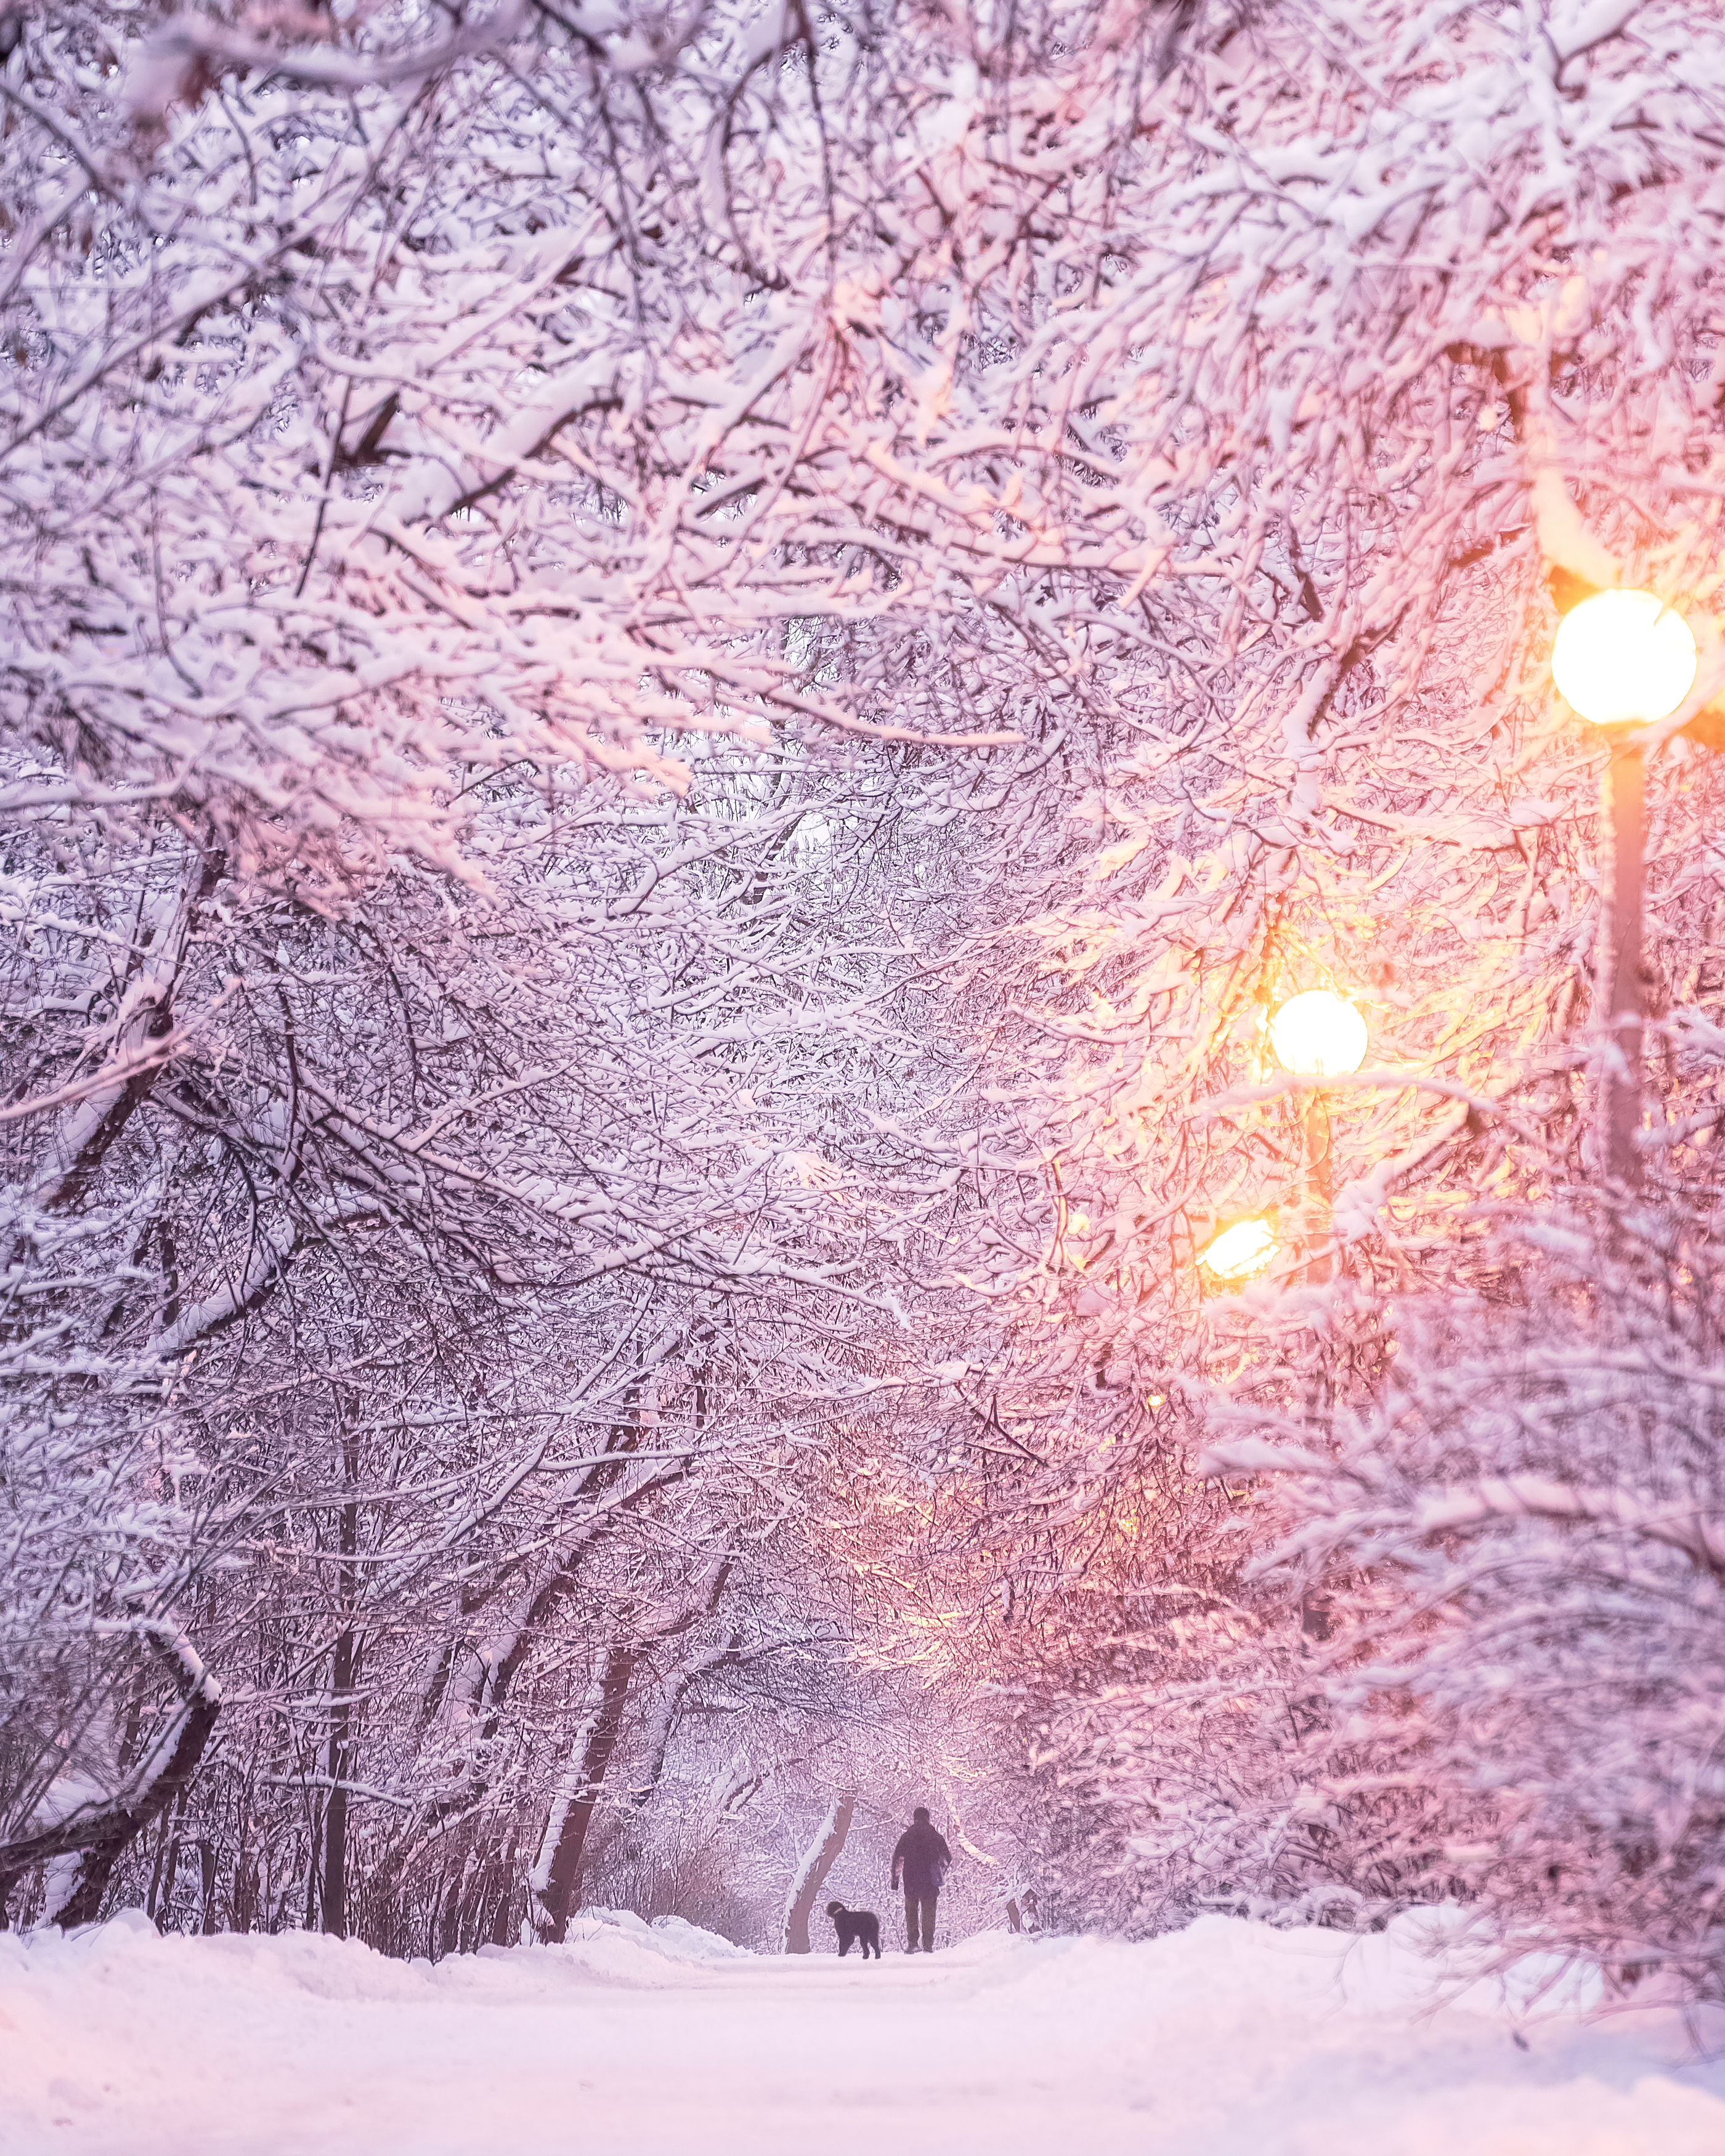  Snow, winter, снег, зима, рассвет, Мазурева Анастасия